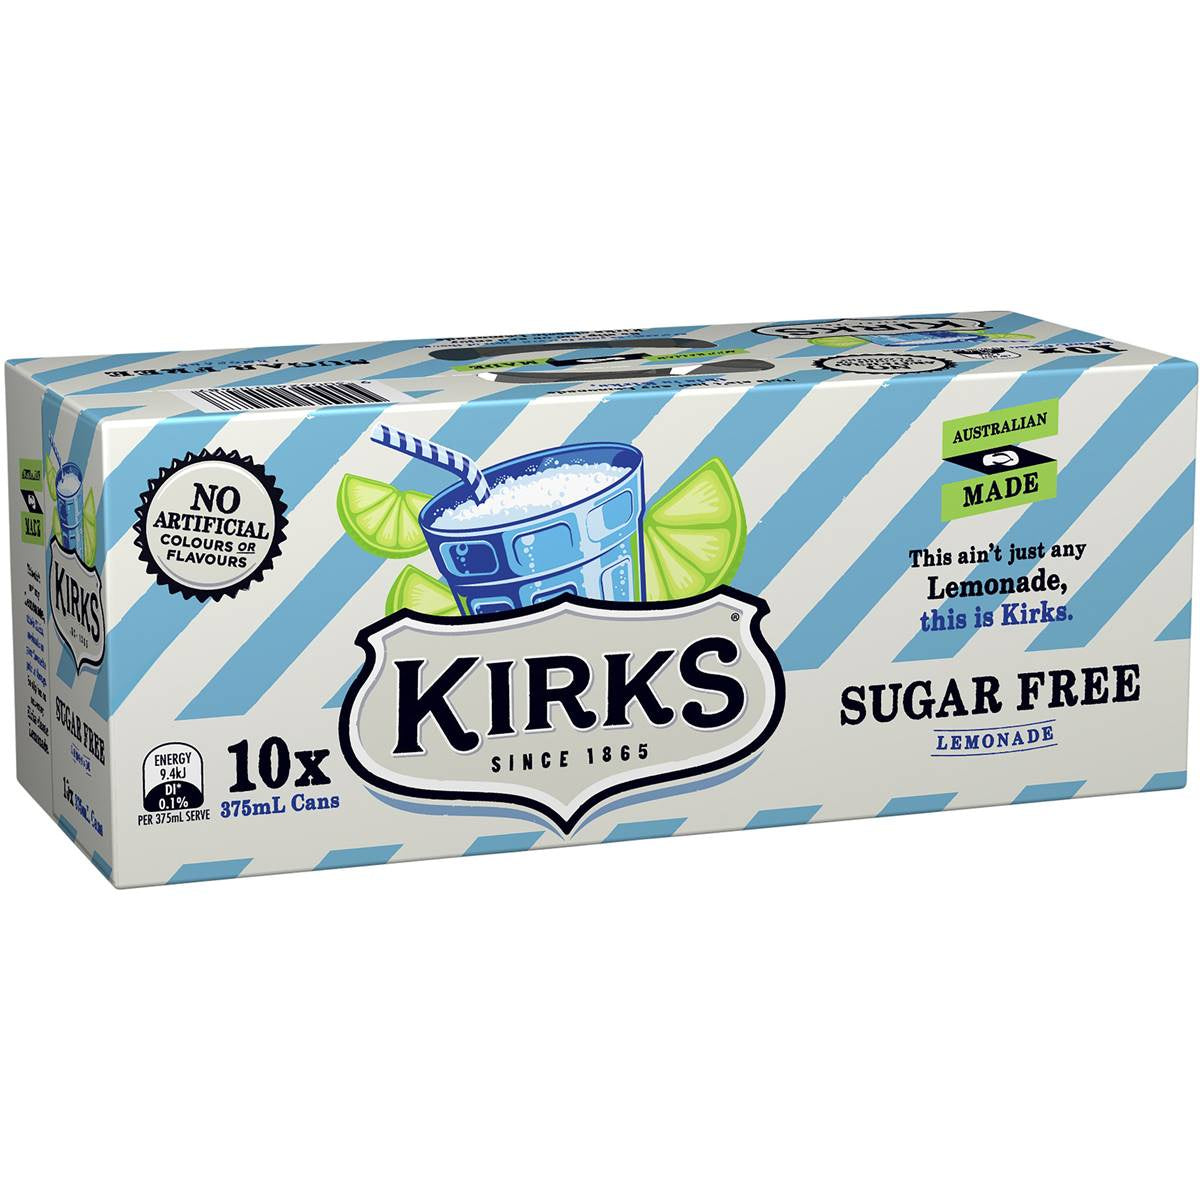 Kirks Cans Lemonade Sugar Free 375ml 10pk